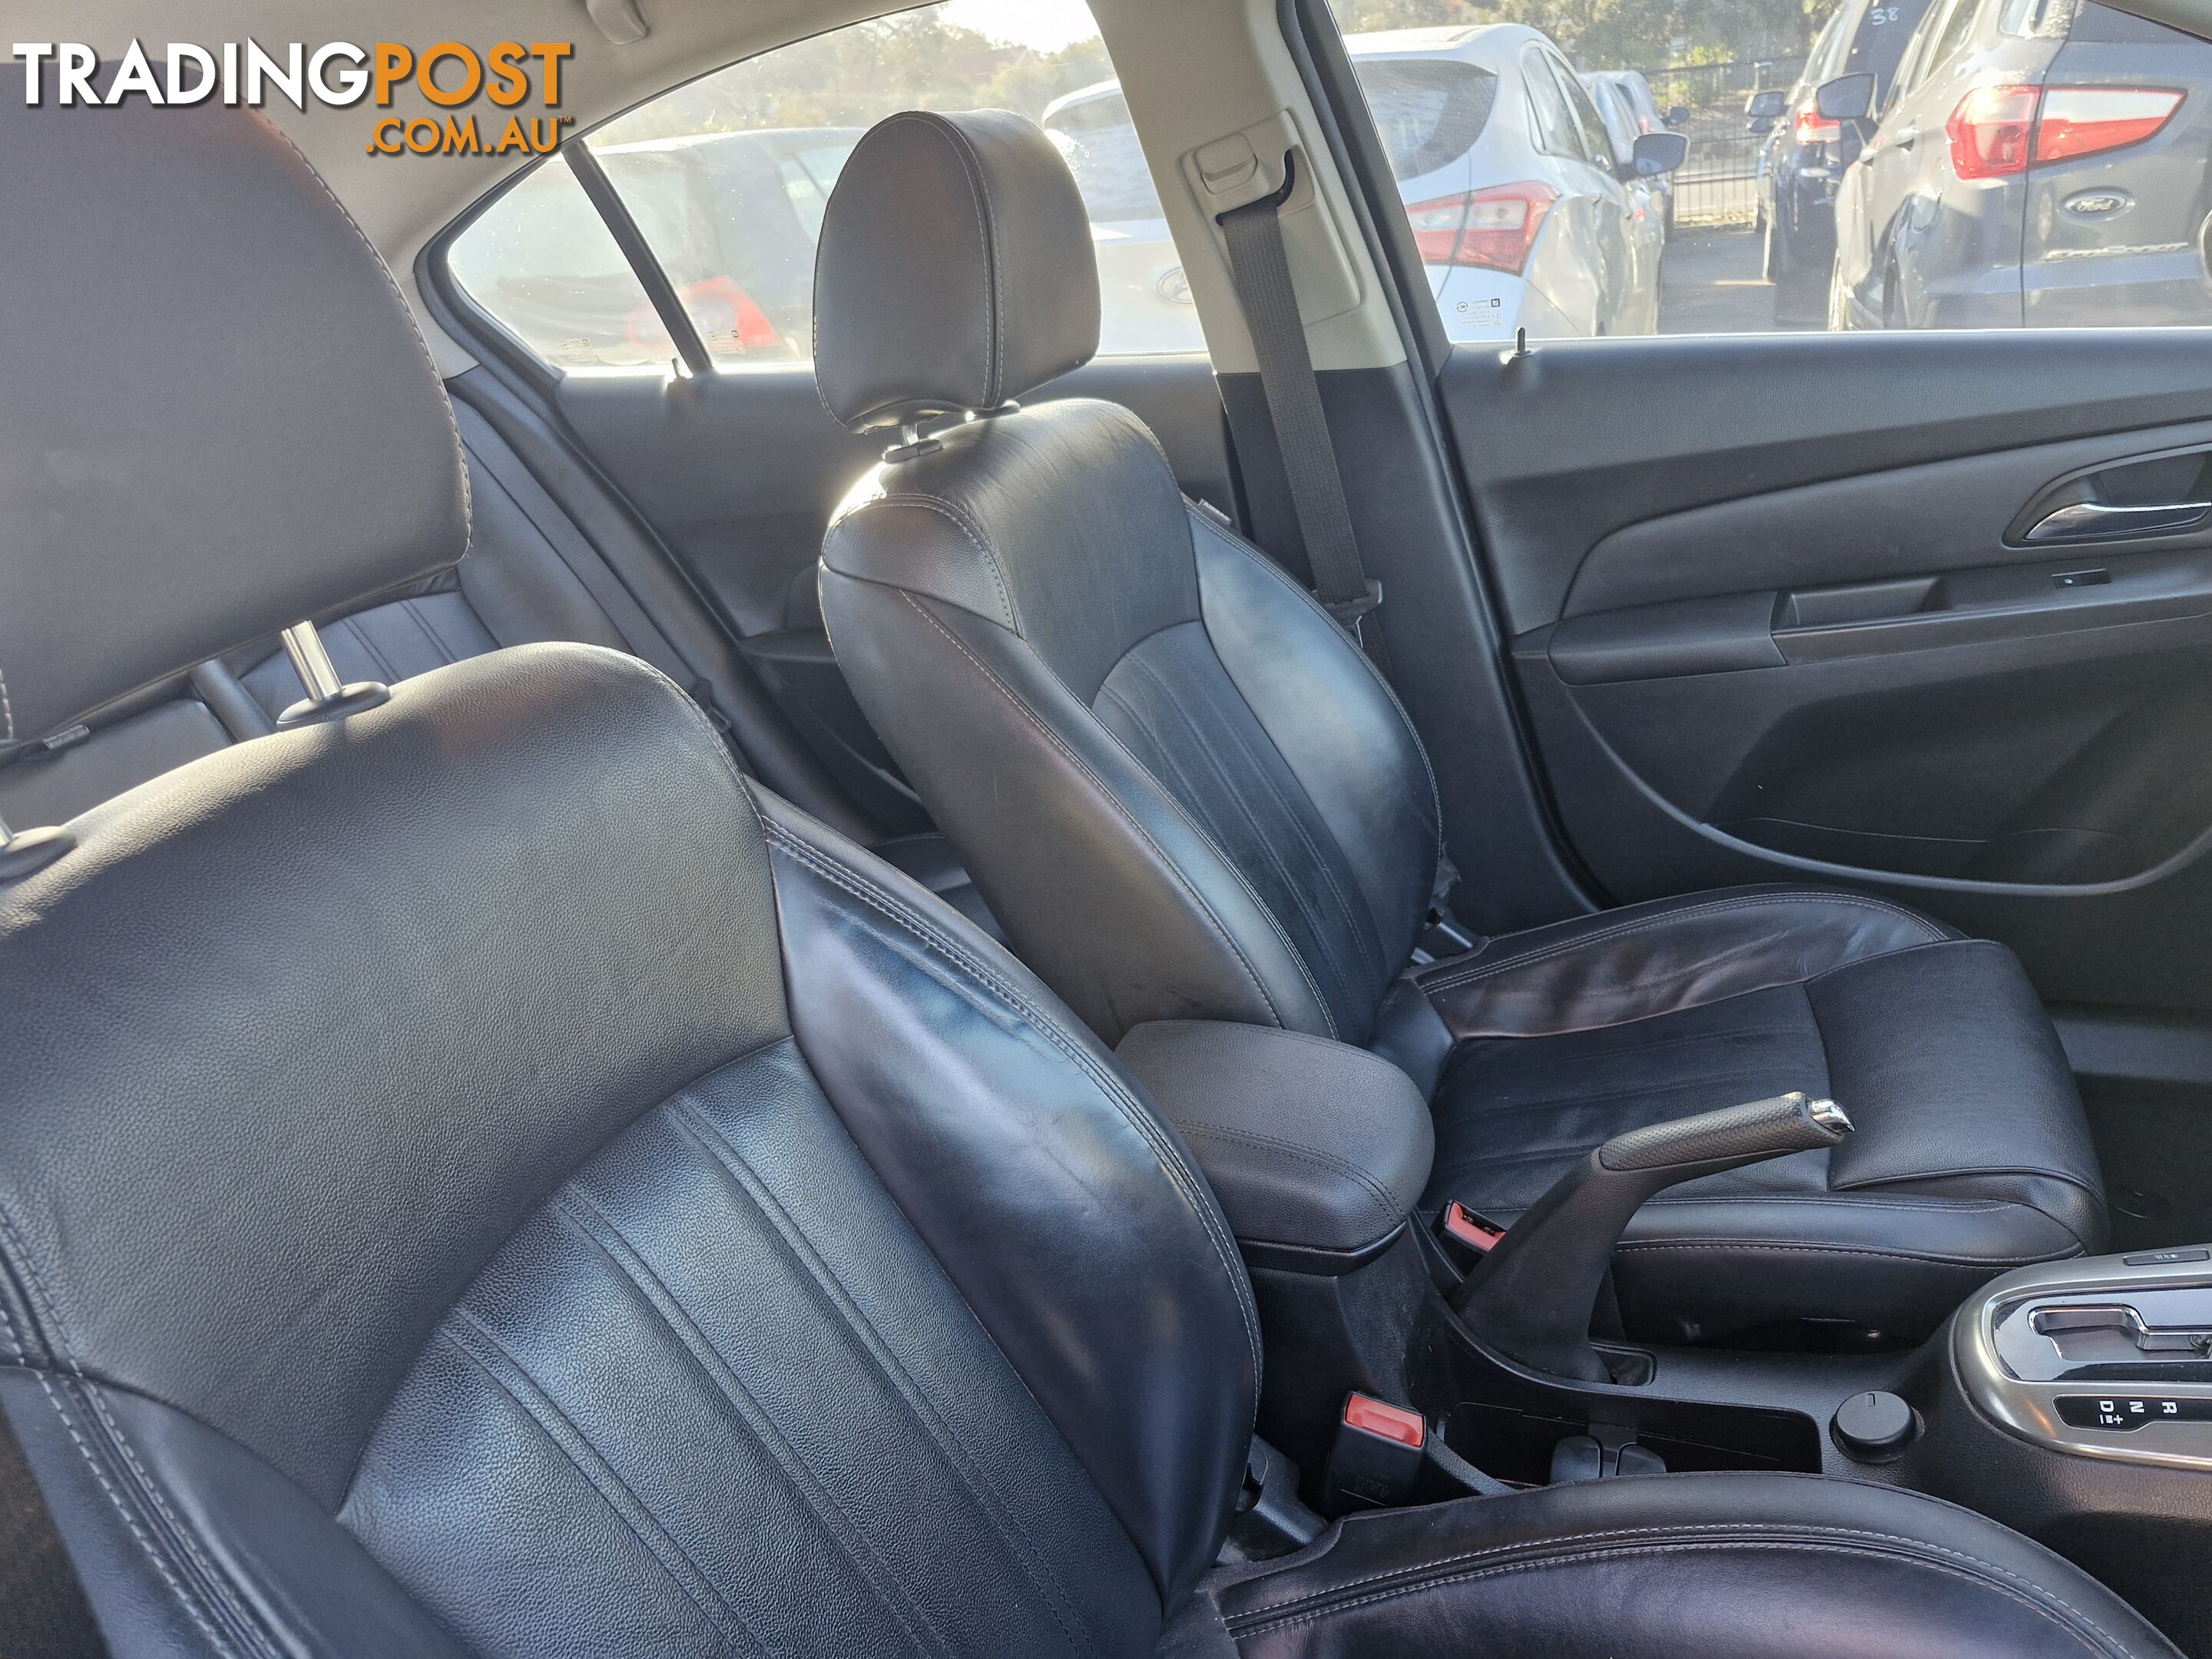 2014 Holden Cruze JHMY14 CDX Sedan Automatic